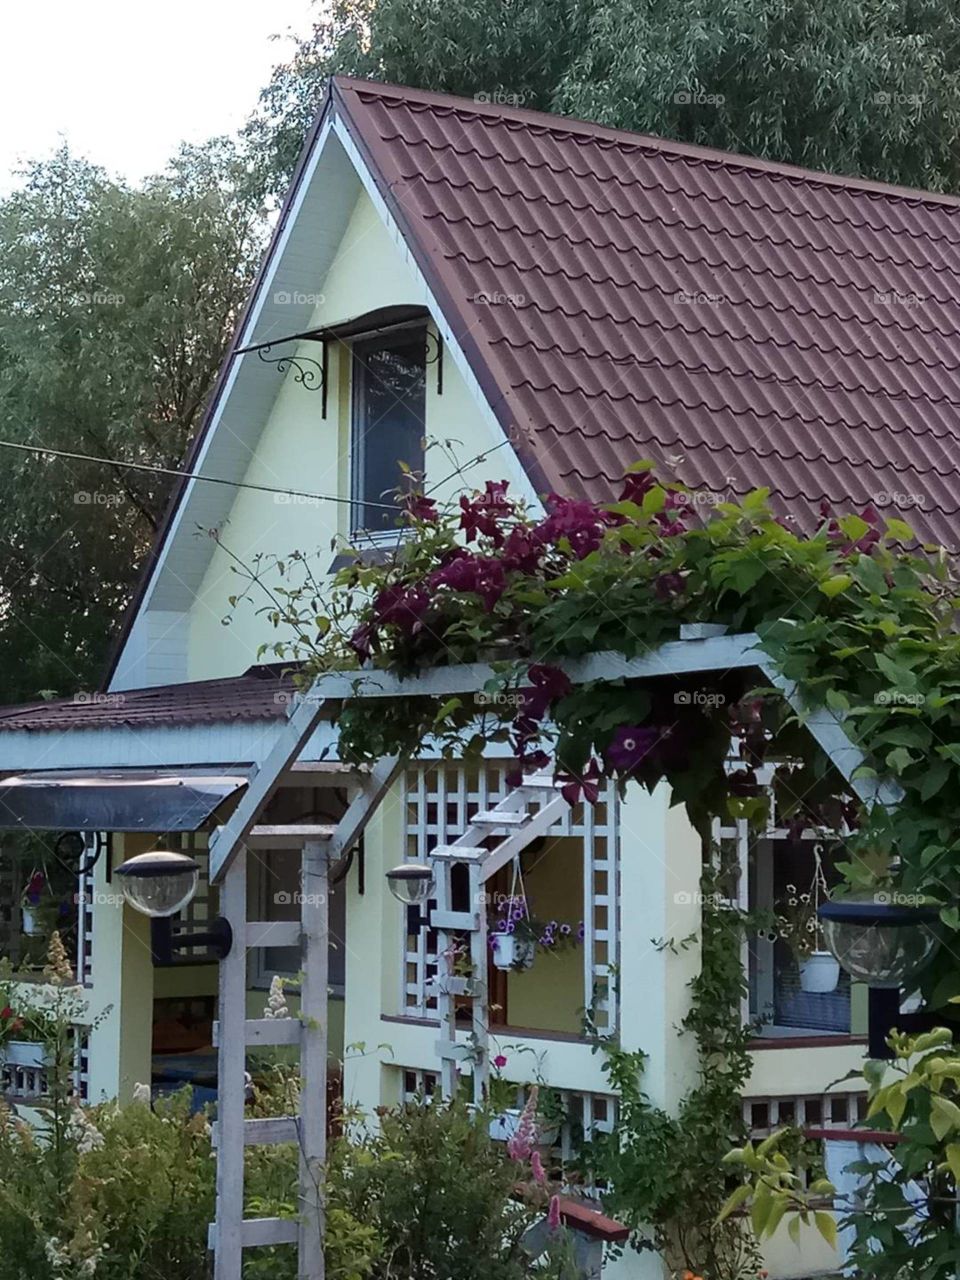 my blooming cottage in the Kiev region